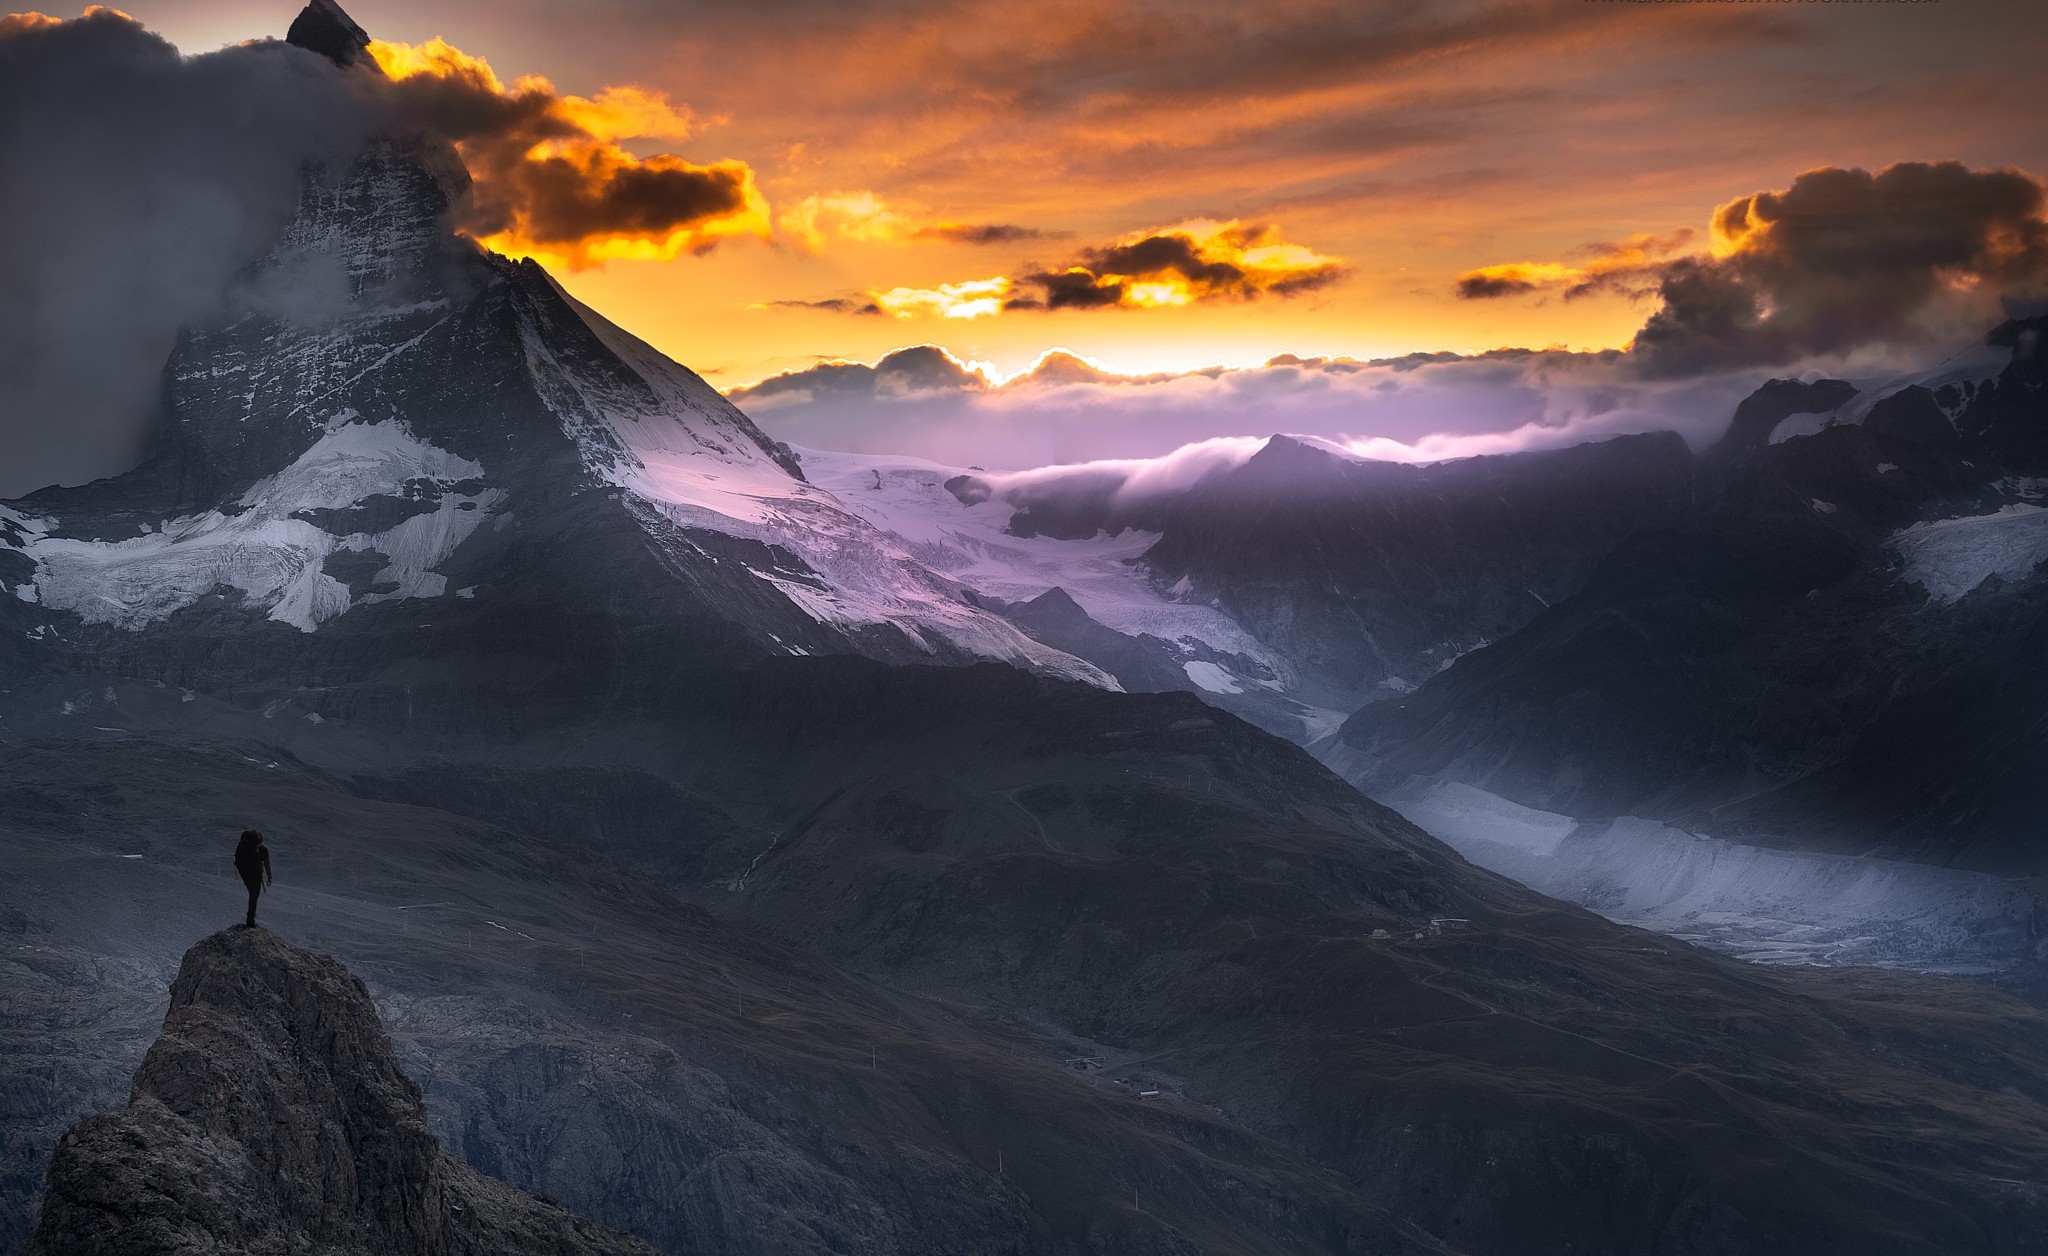 Nature Landscape Sunset Matterhorn Alps Mountains Hiking Snowy Peak Clouds Sky Switzerland 2048x1256